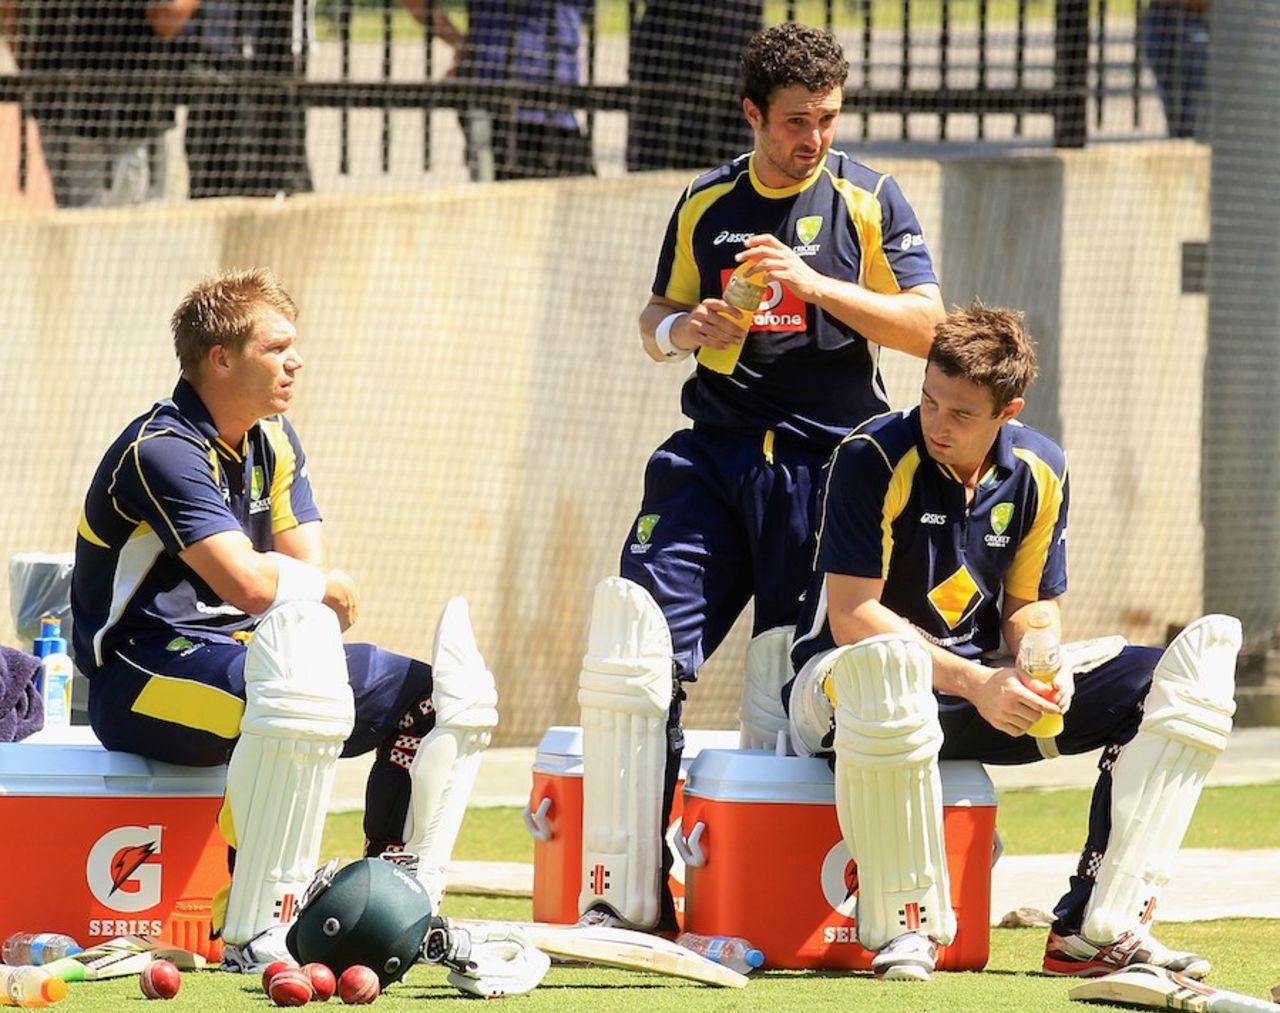 Australia's top three - David Warner, Ed Cowan and Shaun Marsh - at a net session, Melbourne, December 24, 2011